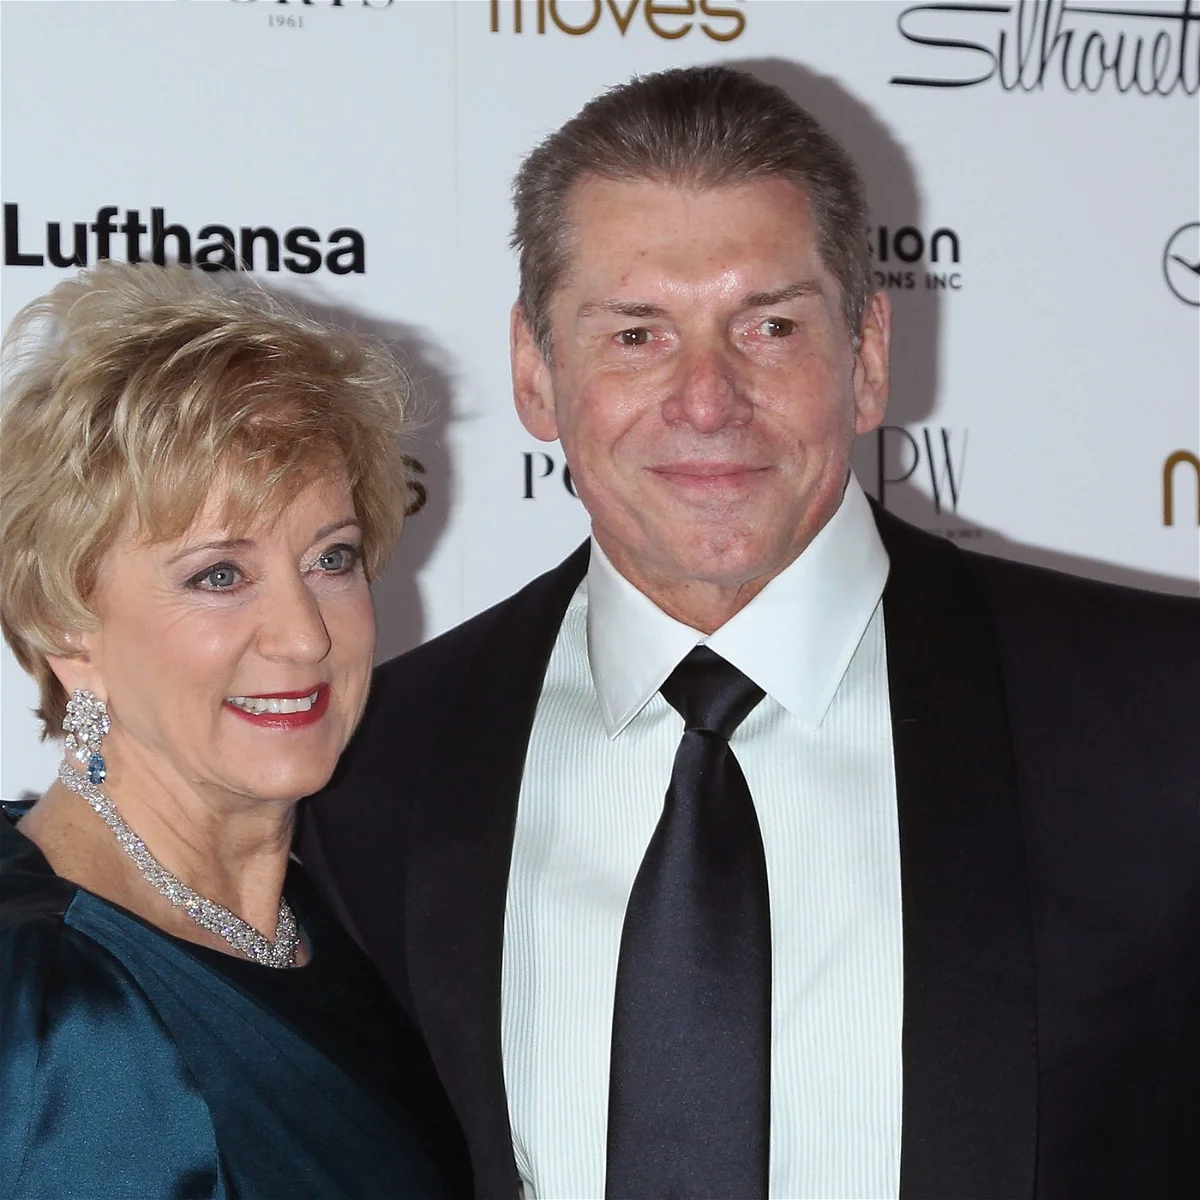 Linda McMahon net worth, age, husband, career, biography and latest updates